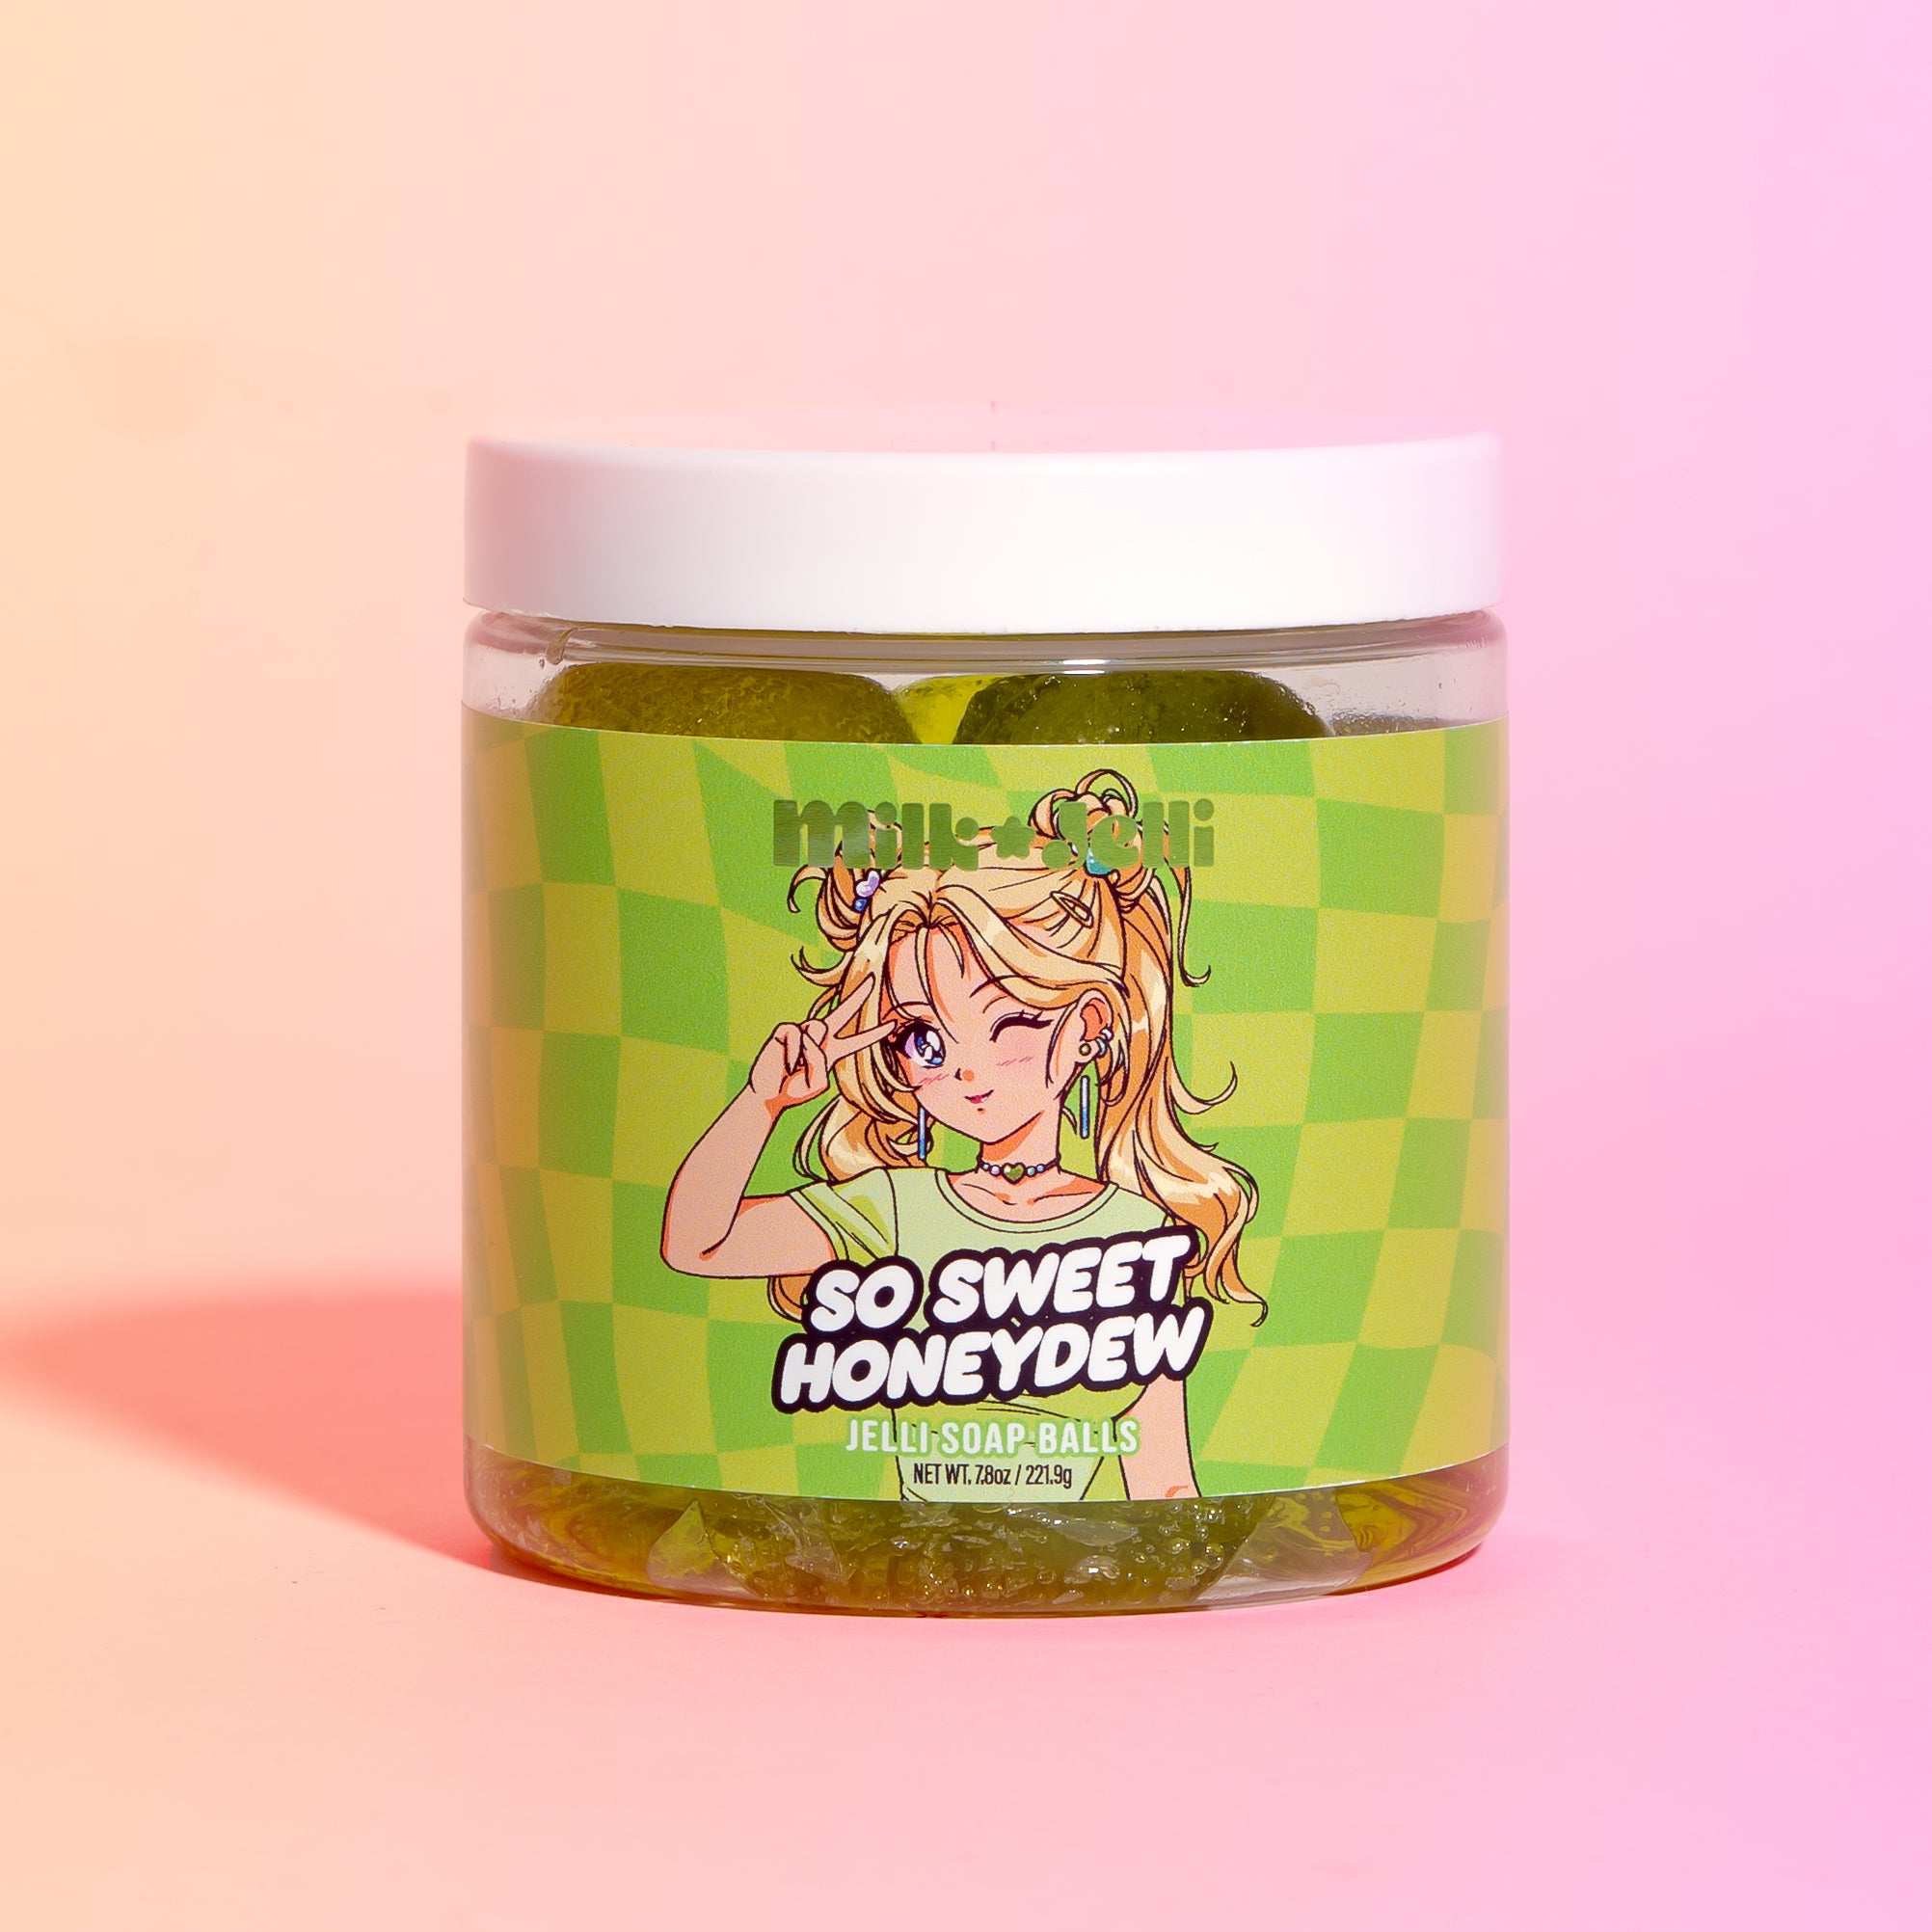 So Sweet Honeydew - Jelli Soap Balls